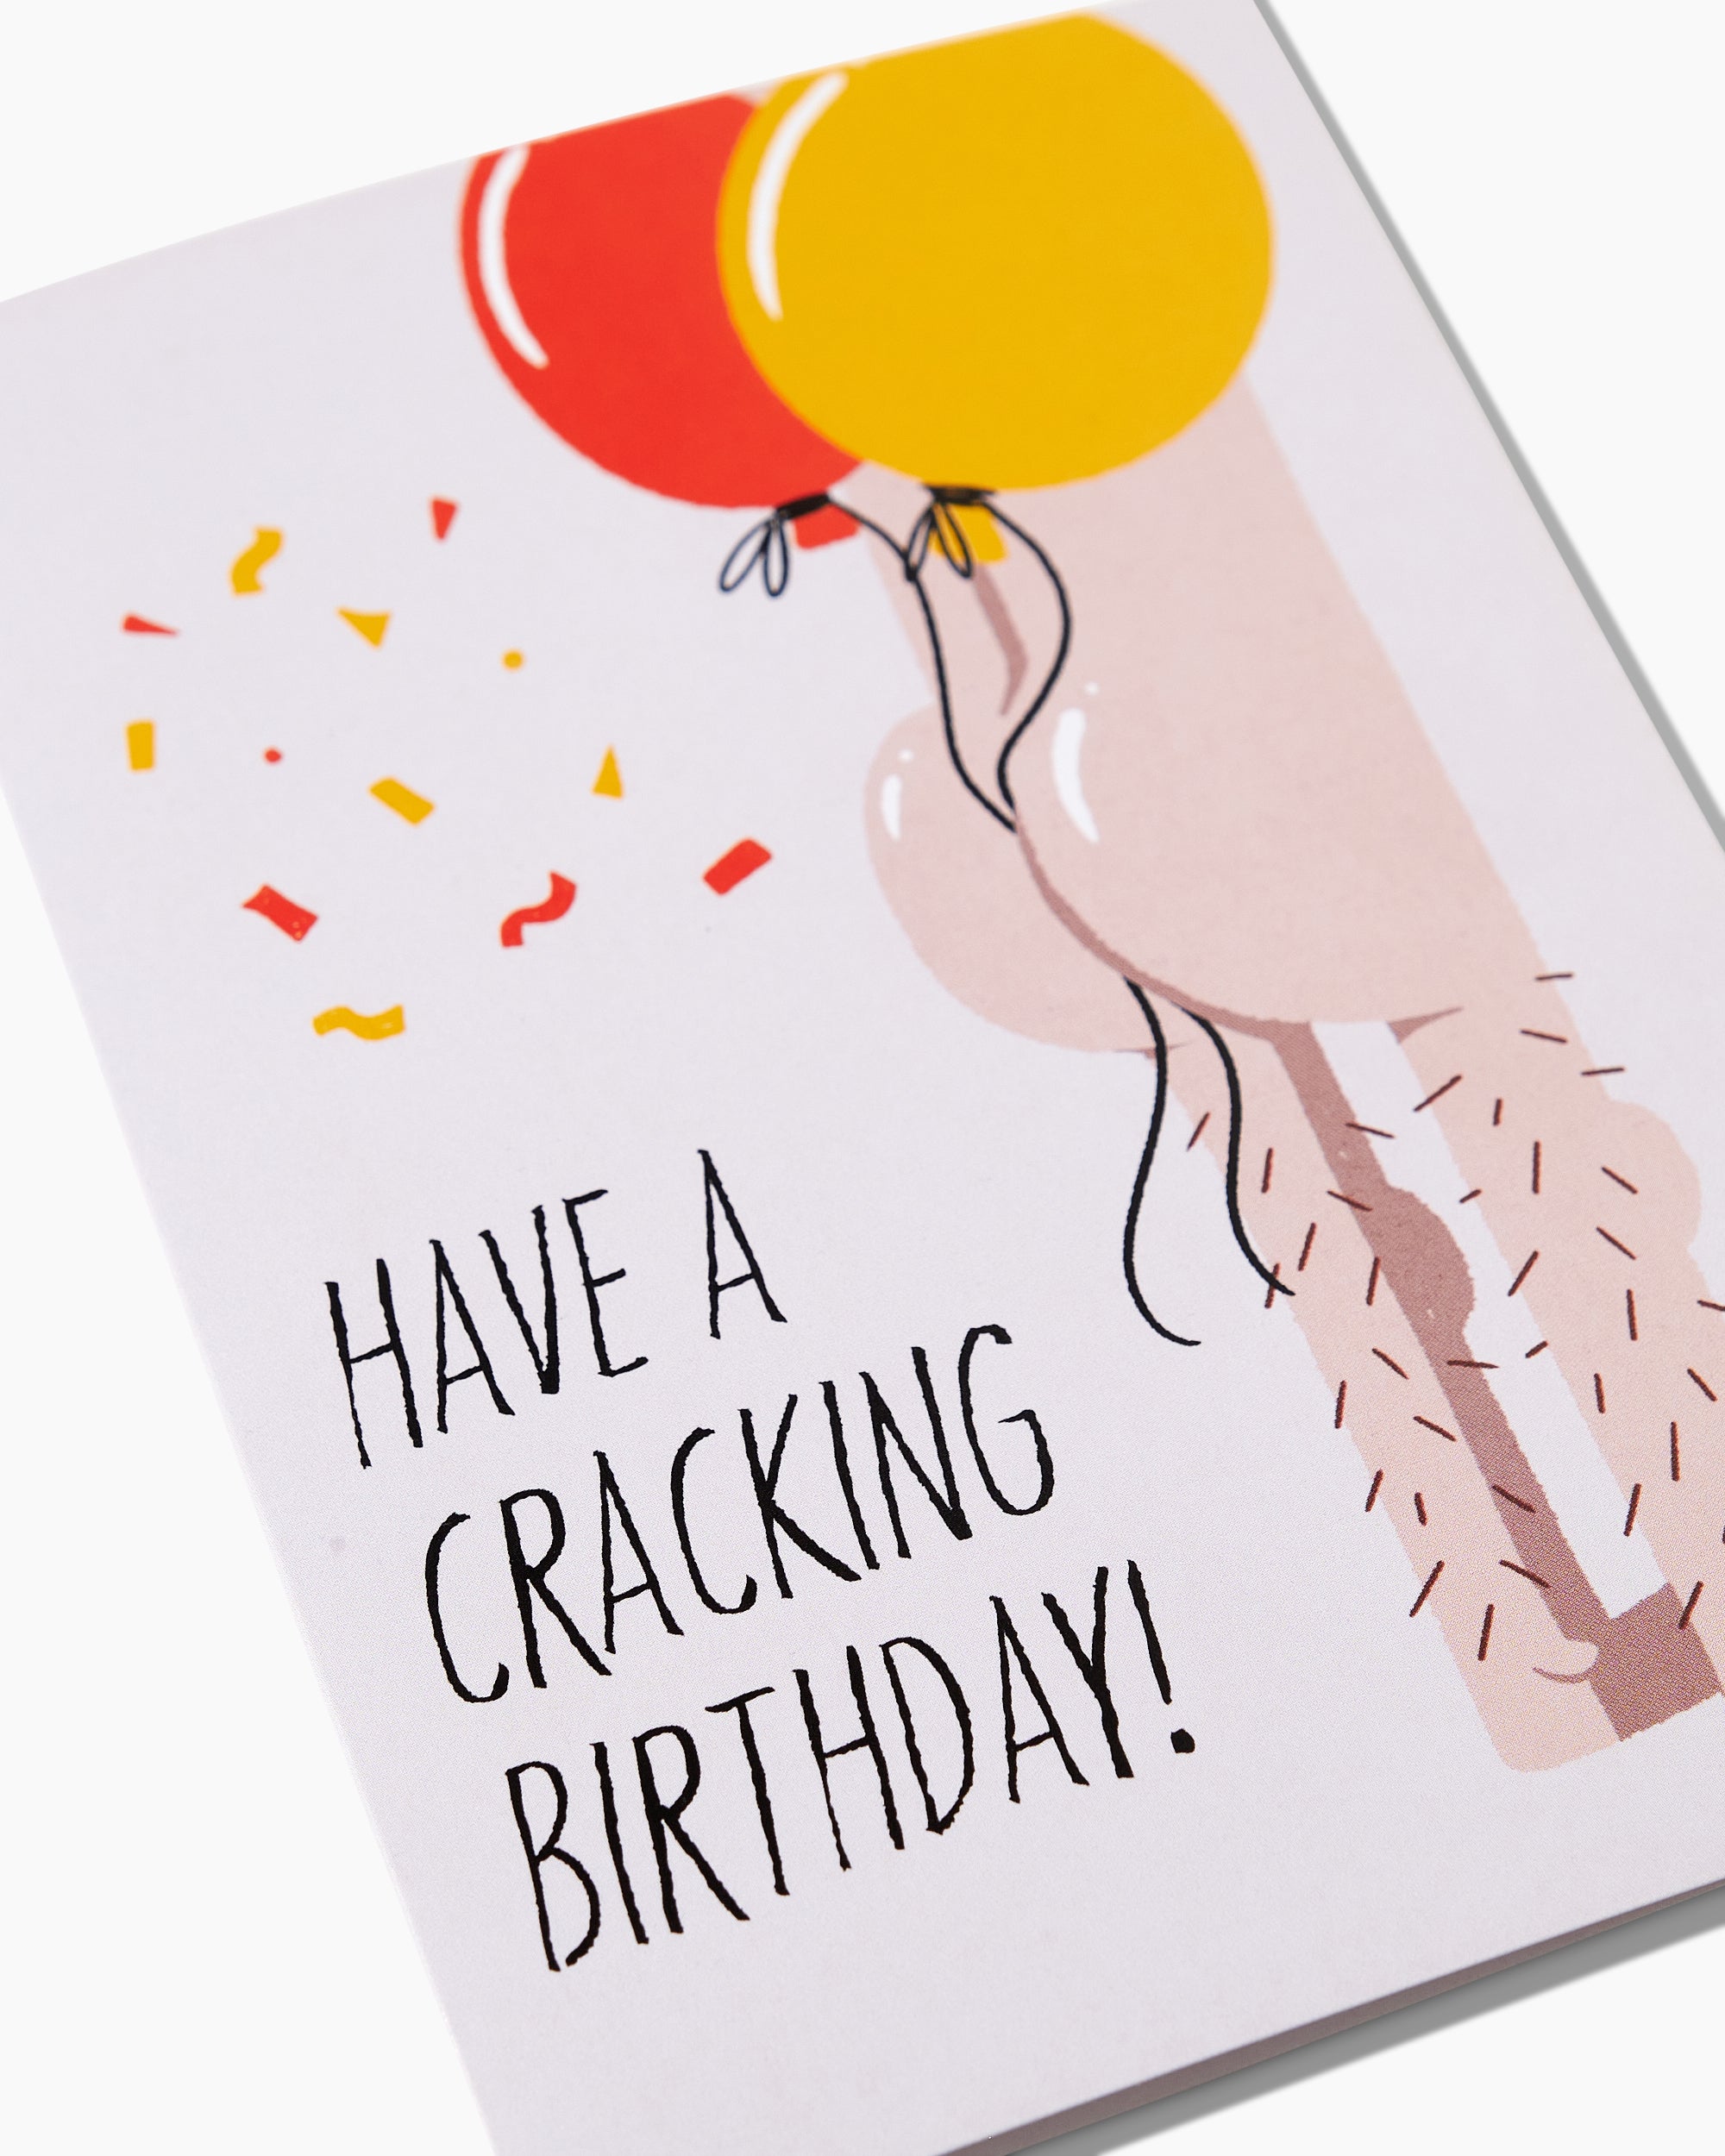 Cracking Birthday Greeting Card Australia Online